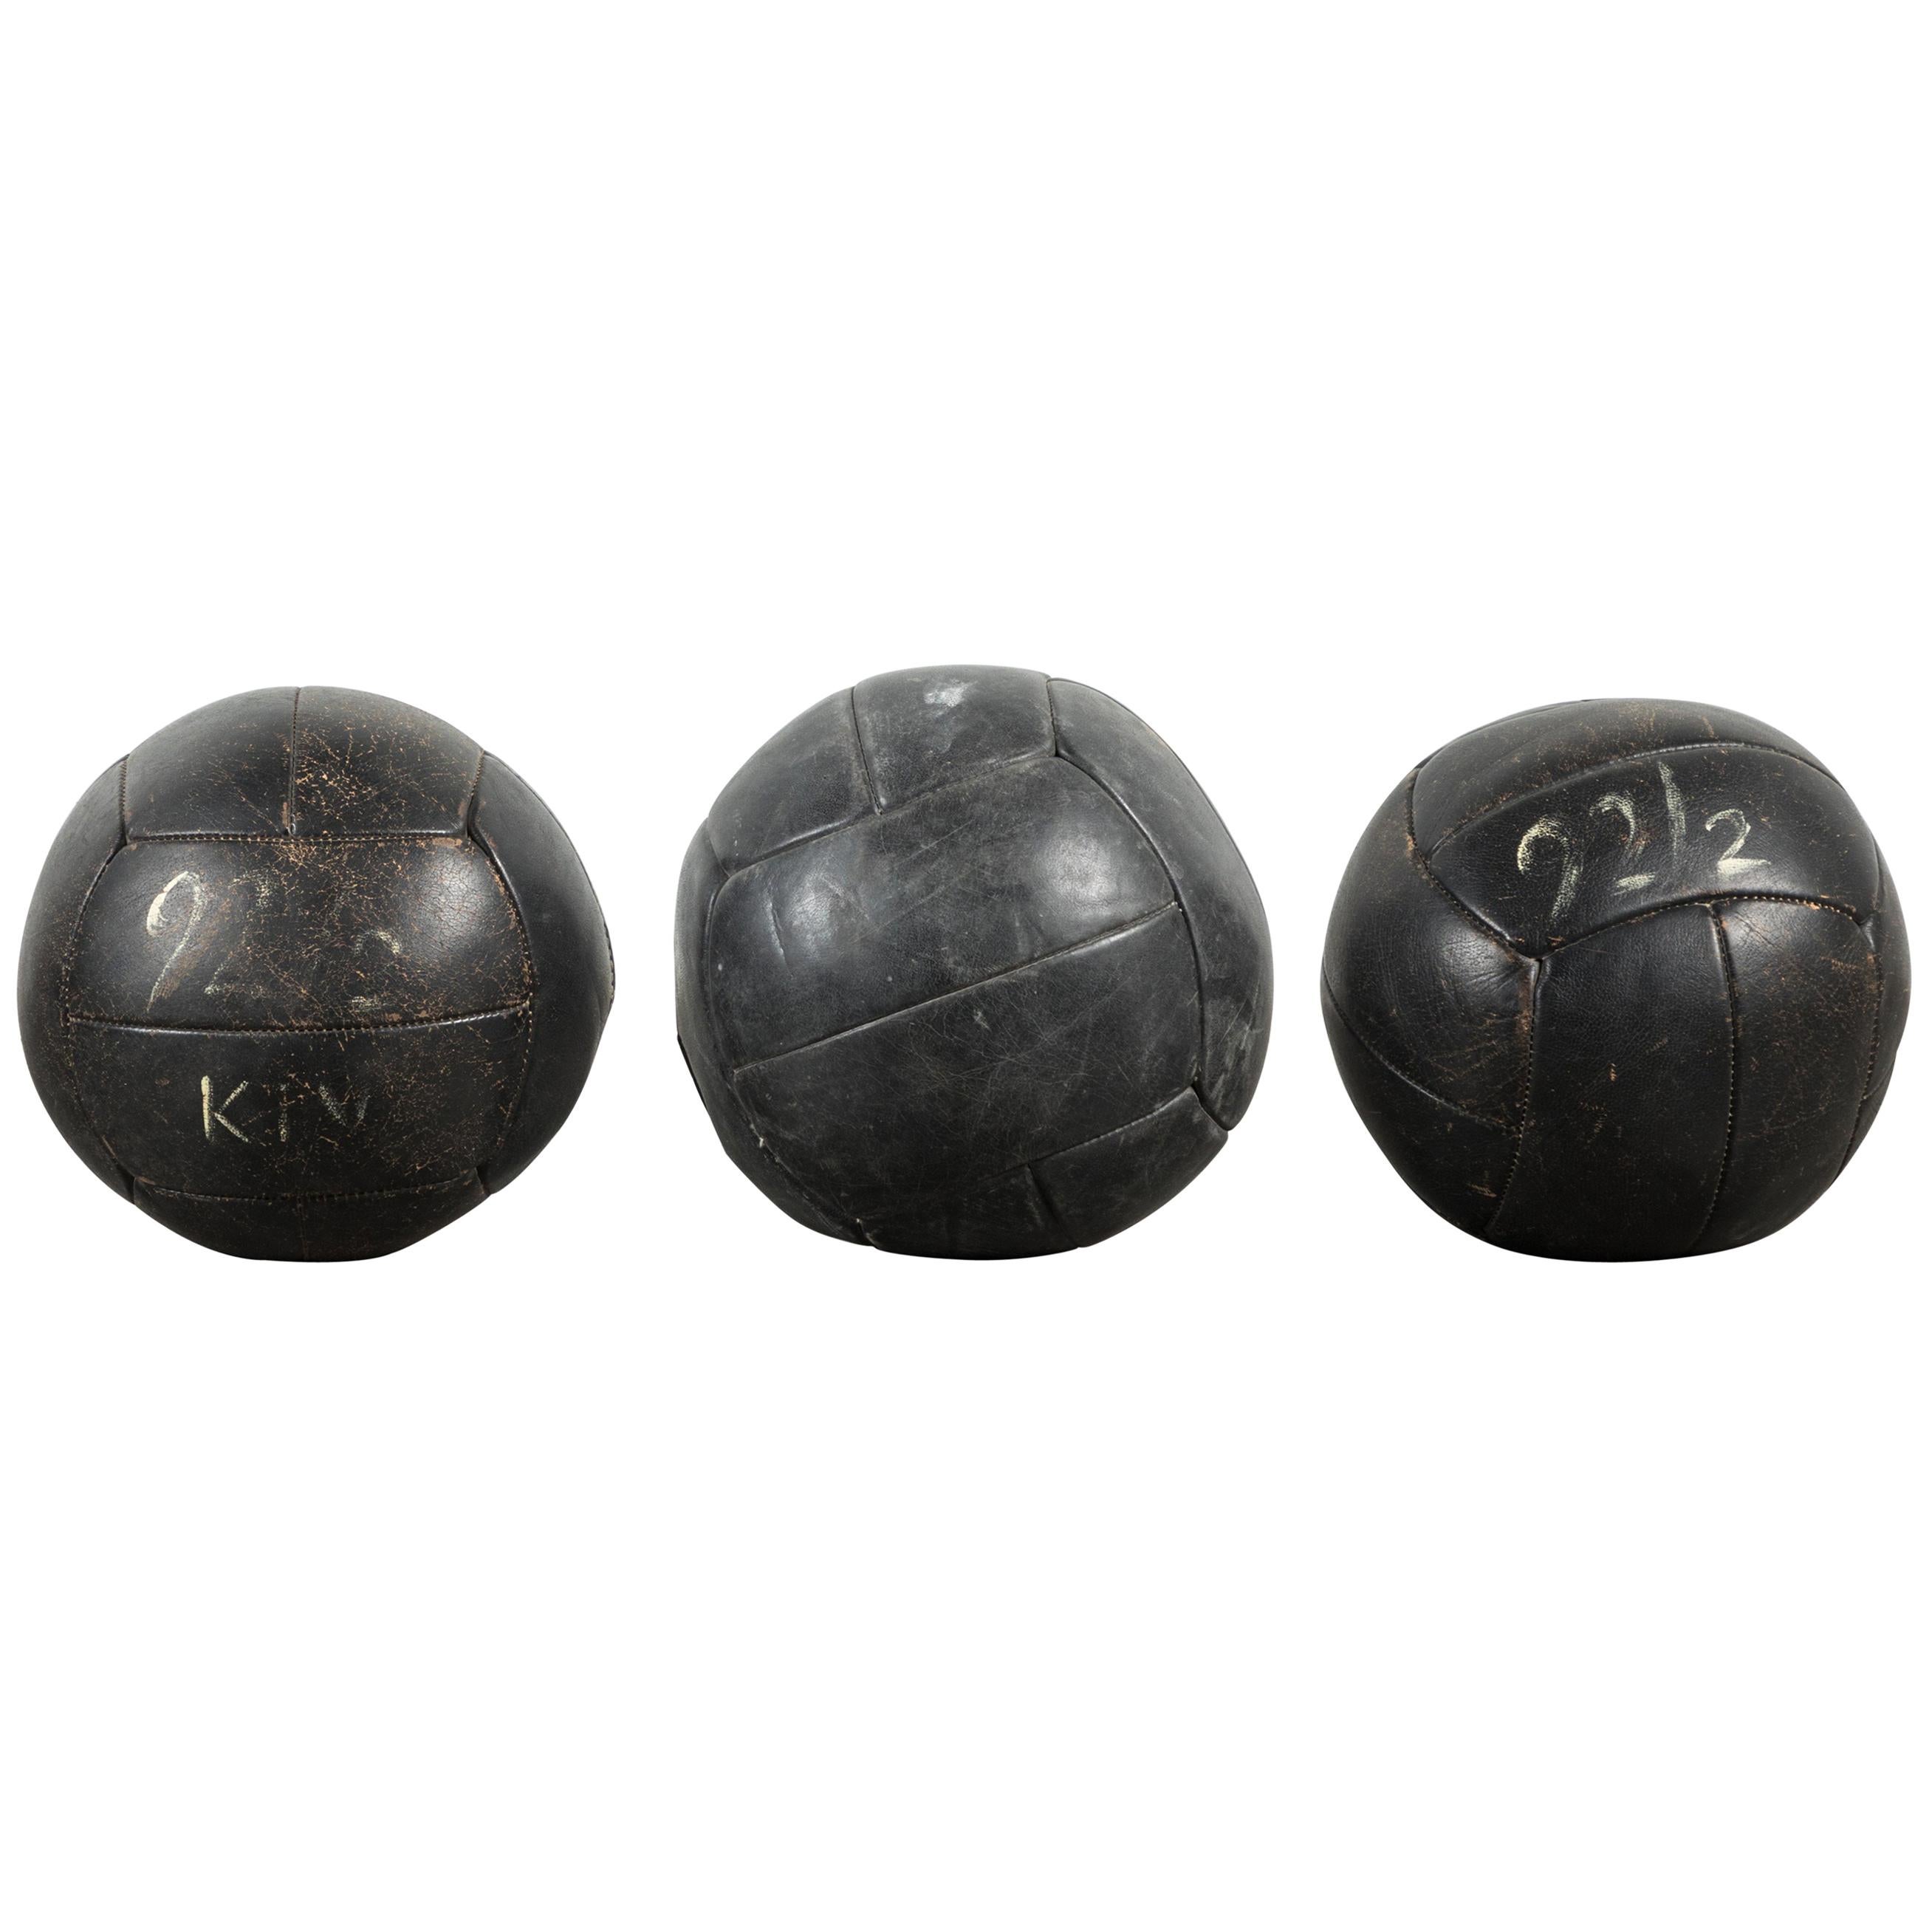 Collection of Three Black Vintage Leather Medicine Balls